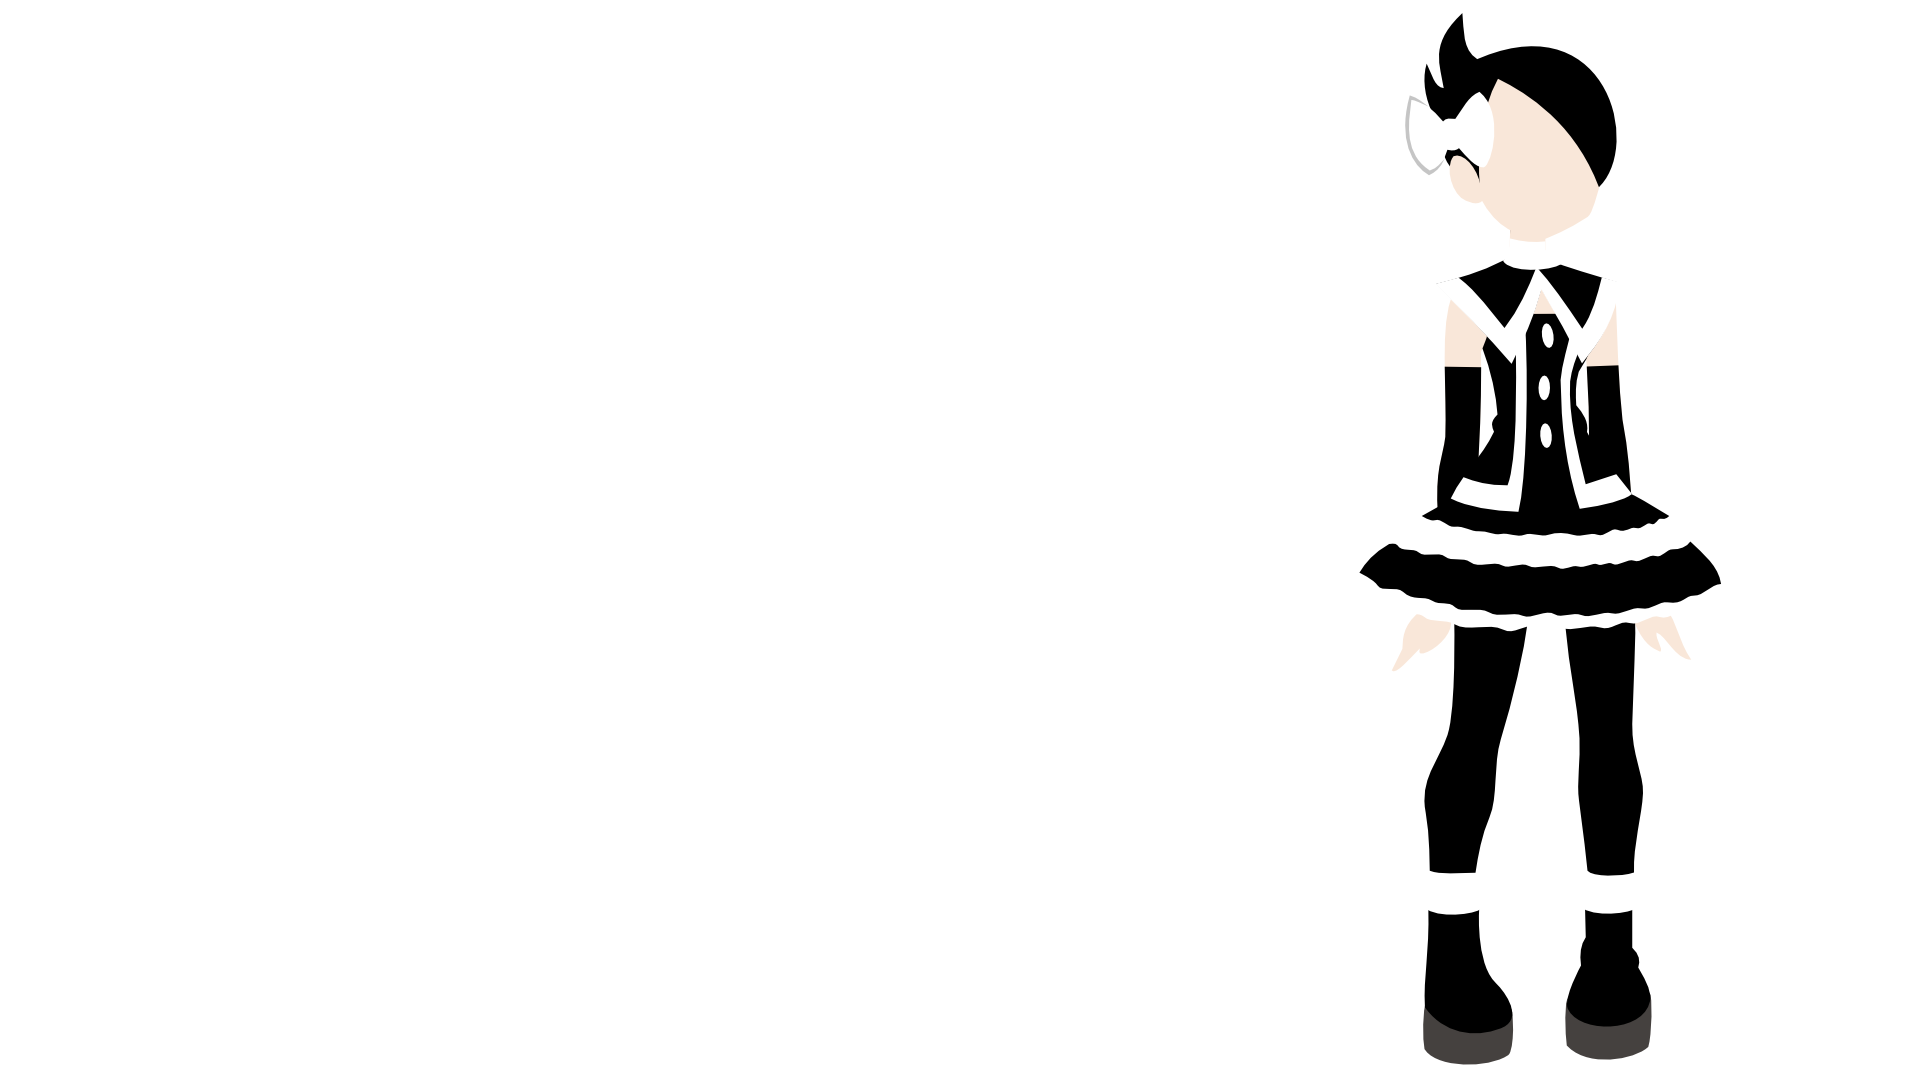 General 1920x1080 minimalism anime anime girls simple background monochrome white background standing